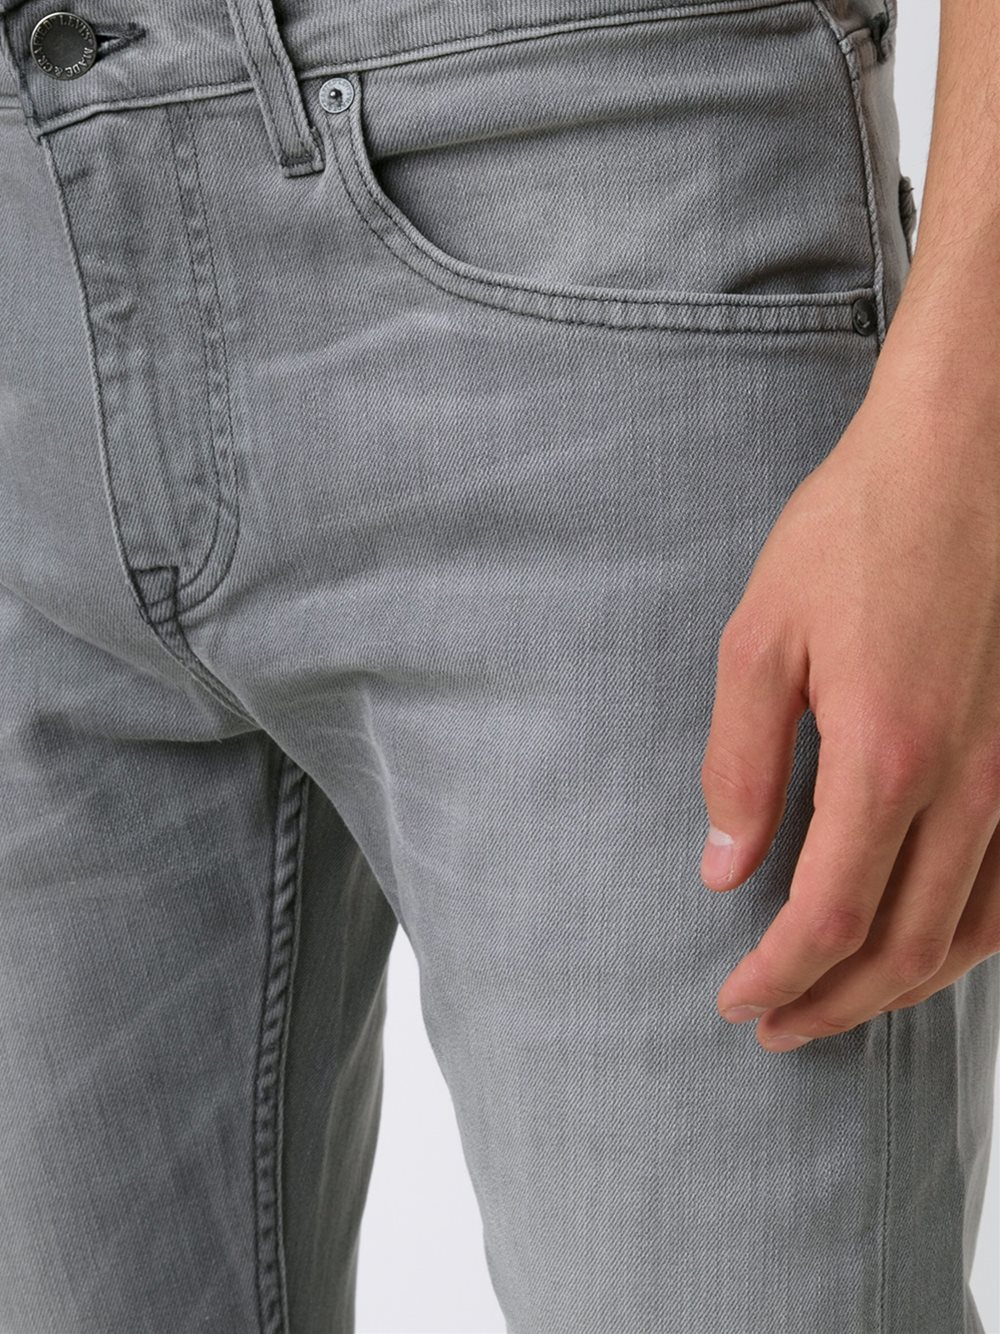 Levi's Straight Leg Jeans in Gray for Men - Lyst